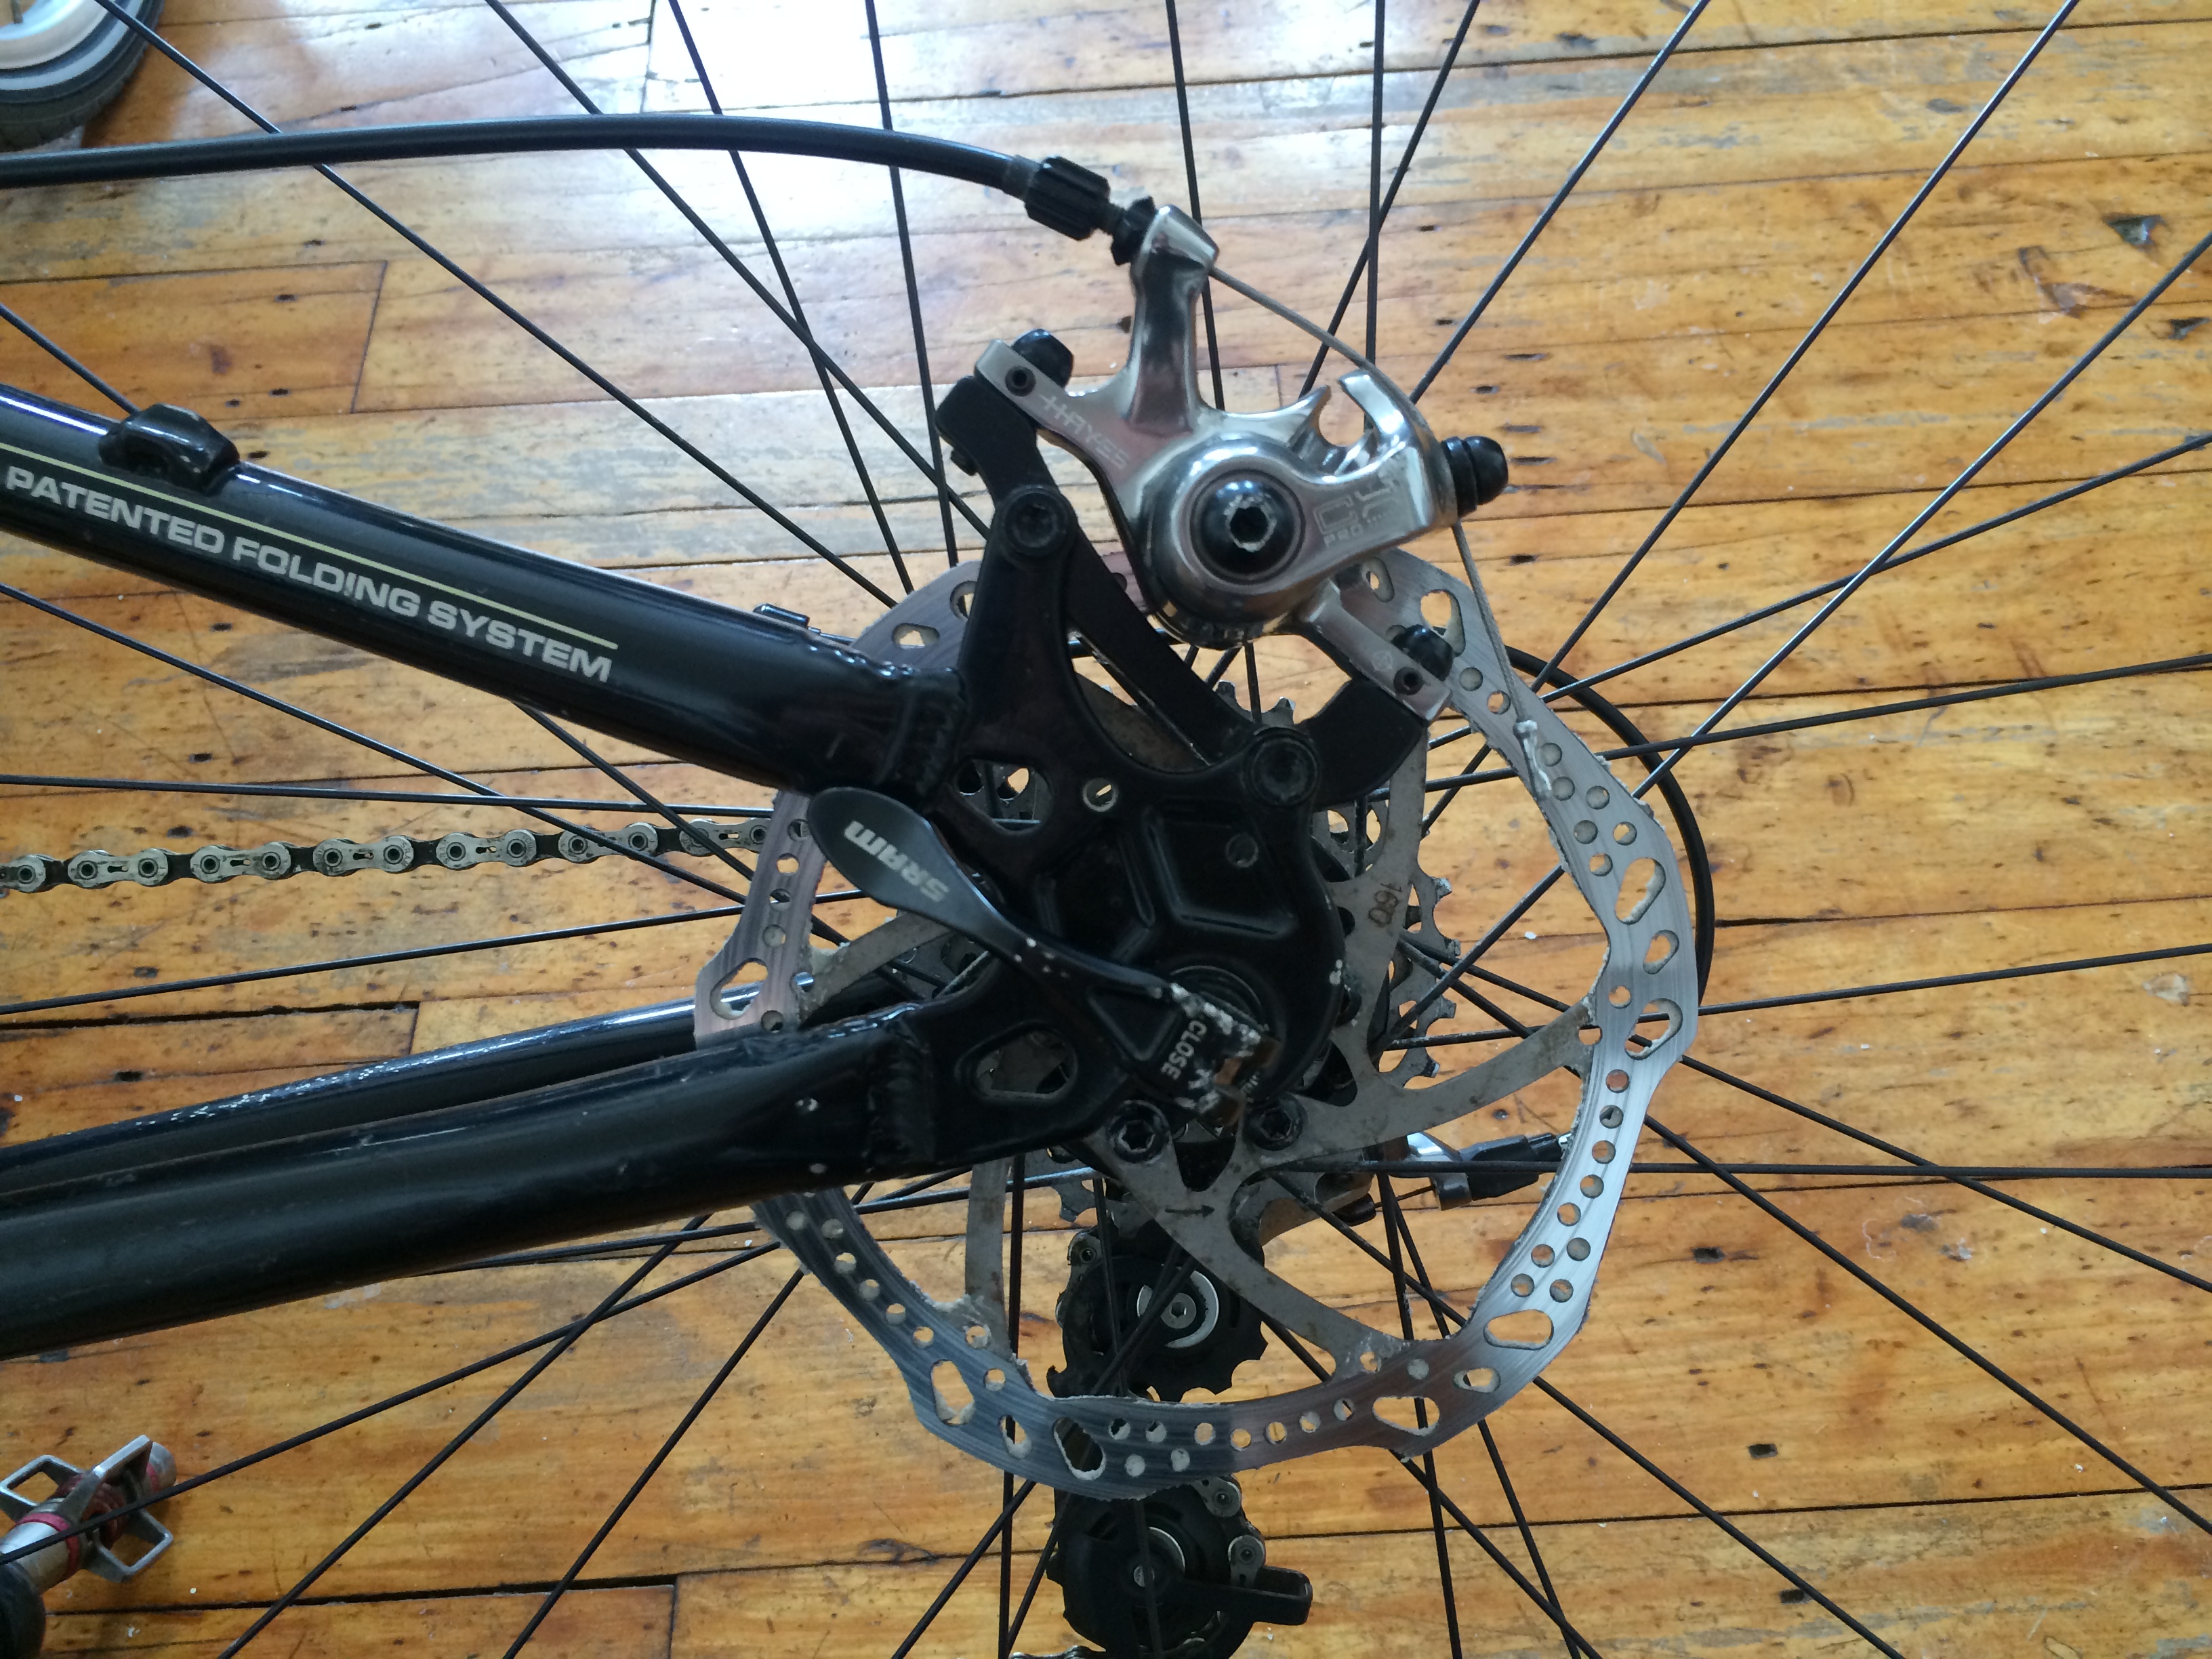 squeaky bike disc brakes